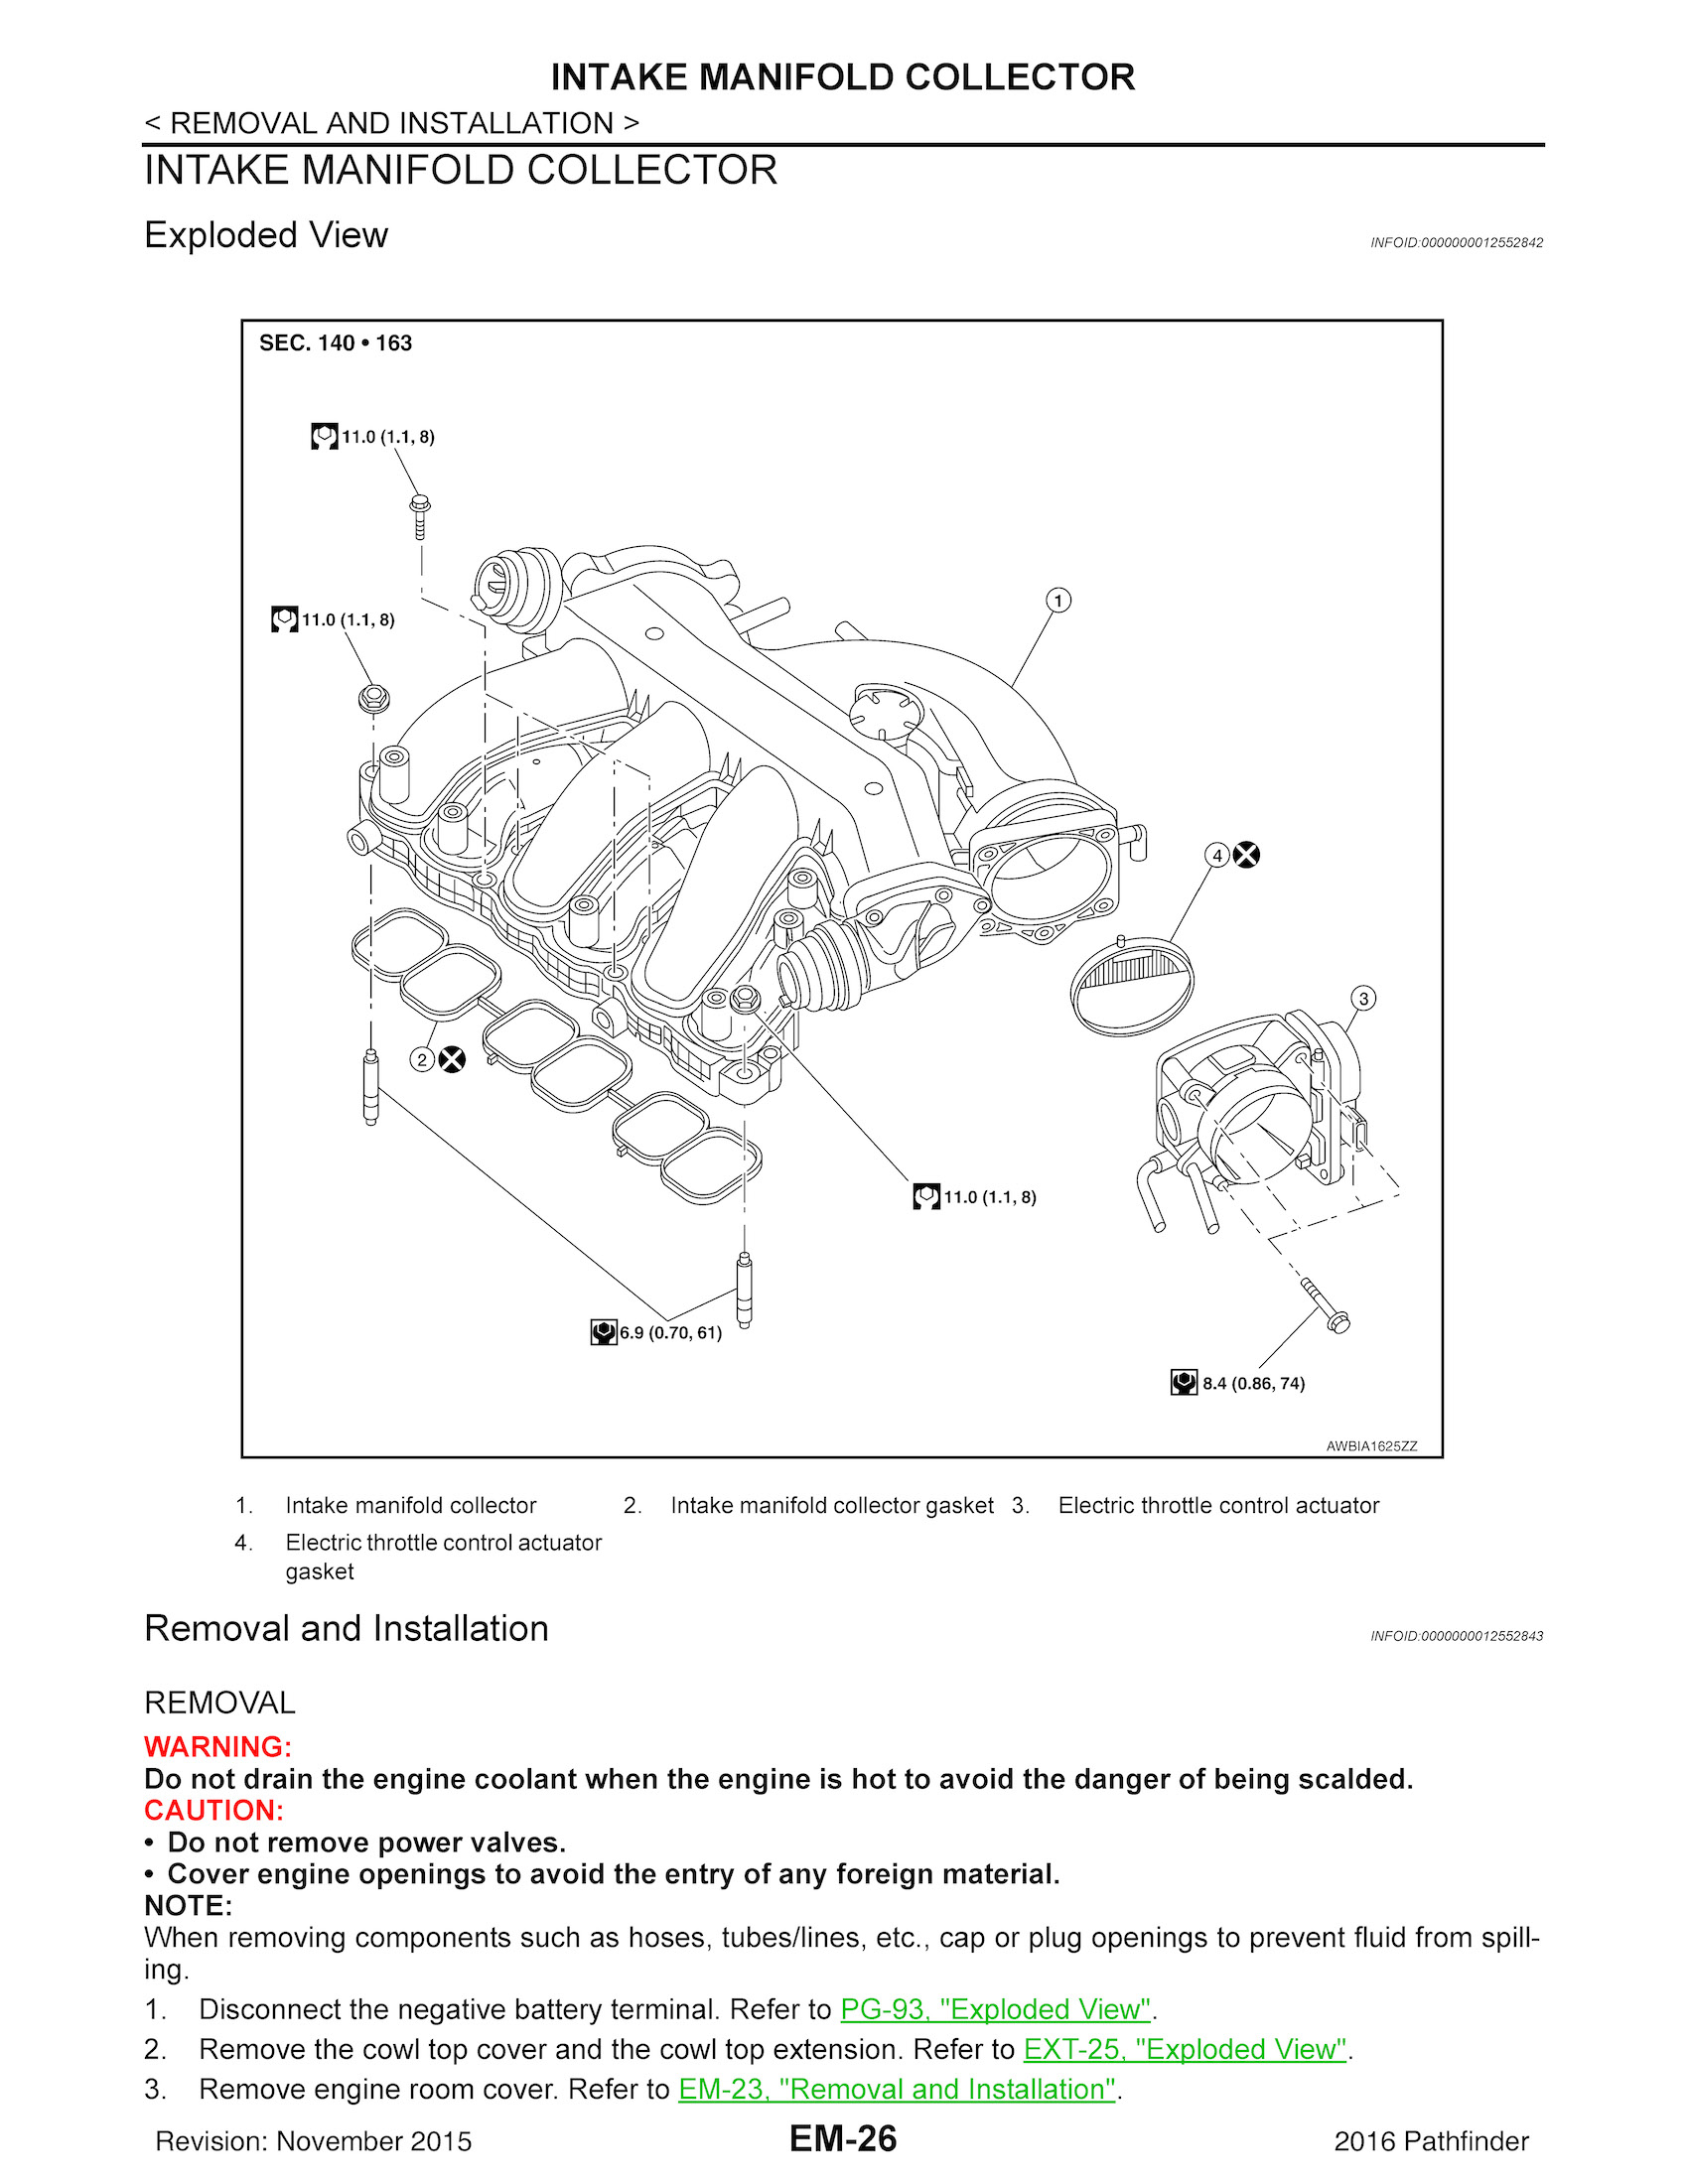 2016 Nissan Pathfinder Repair Manual, Intake Manifold Collector